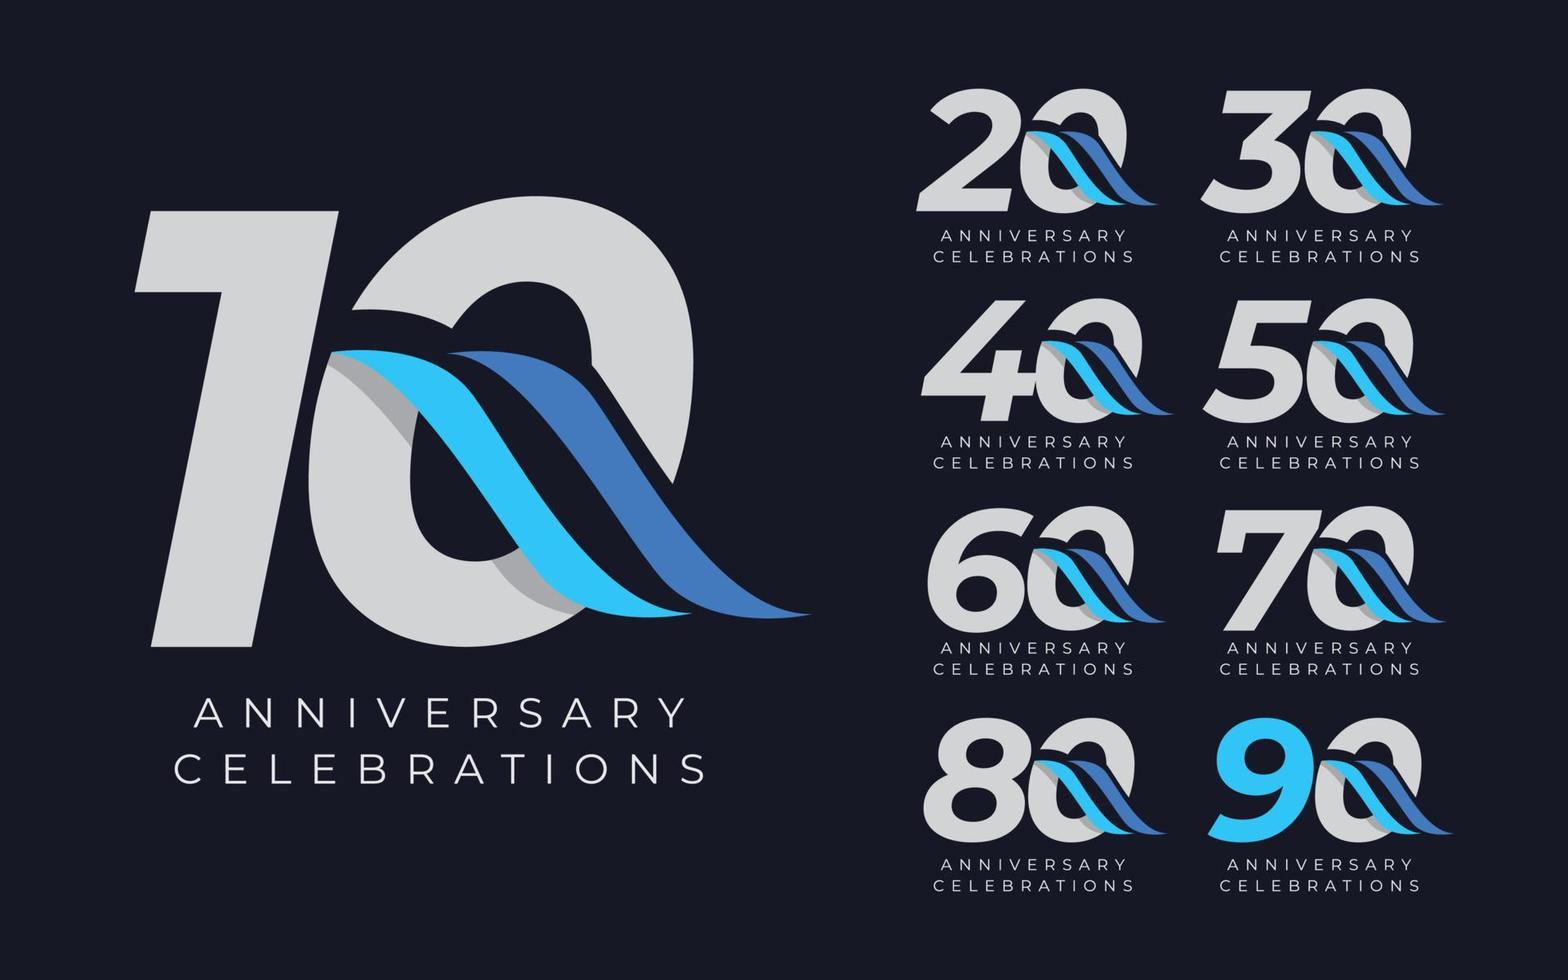 Anniversary celebrations logo design template vector